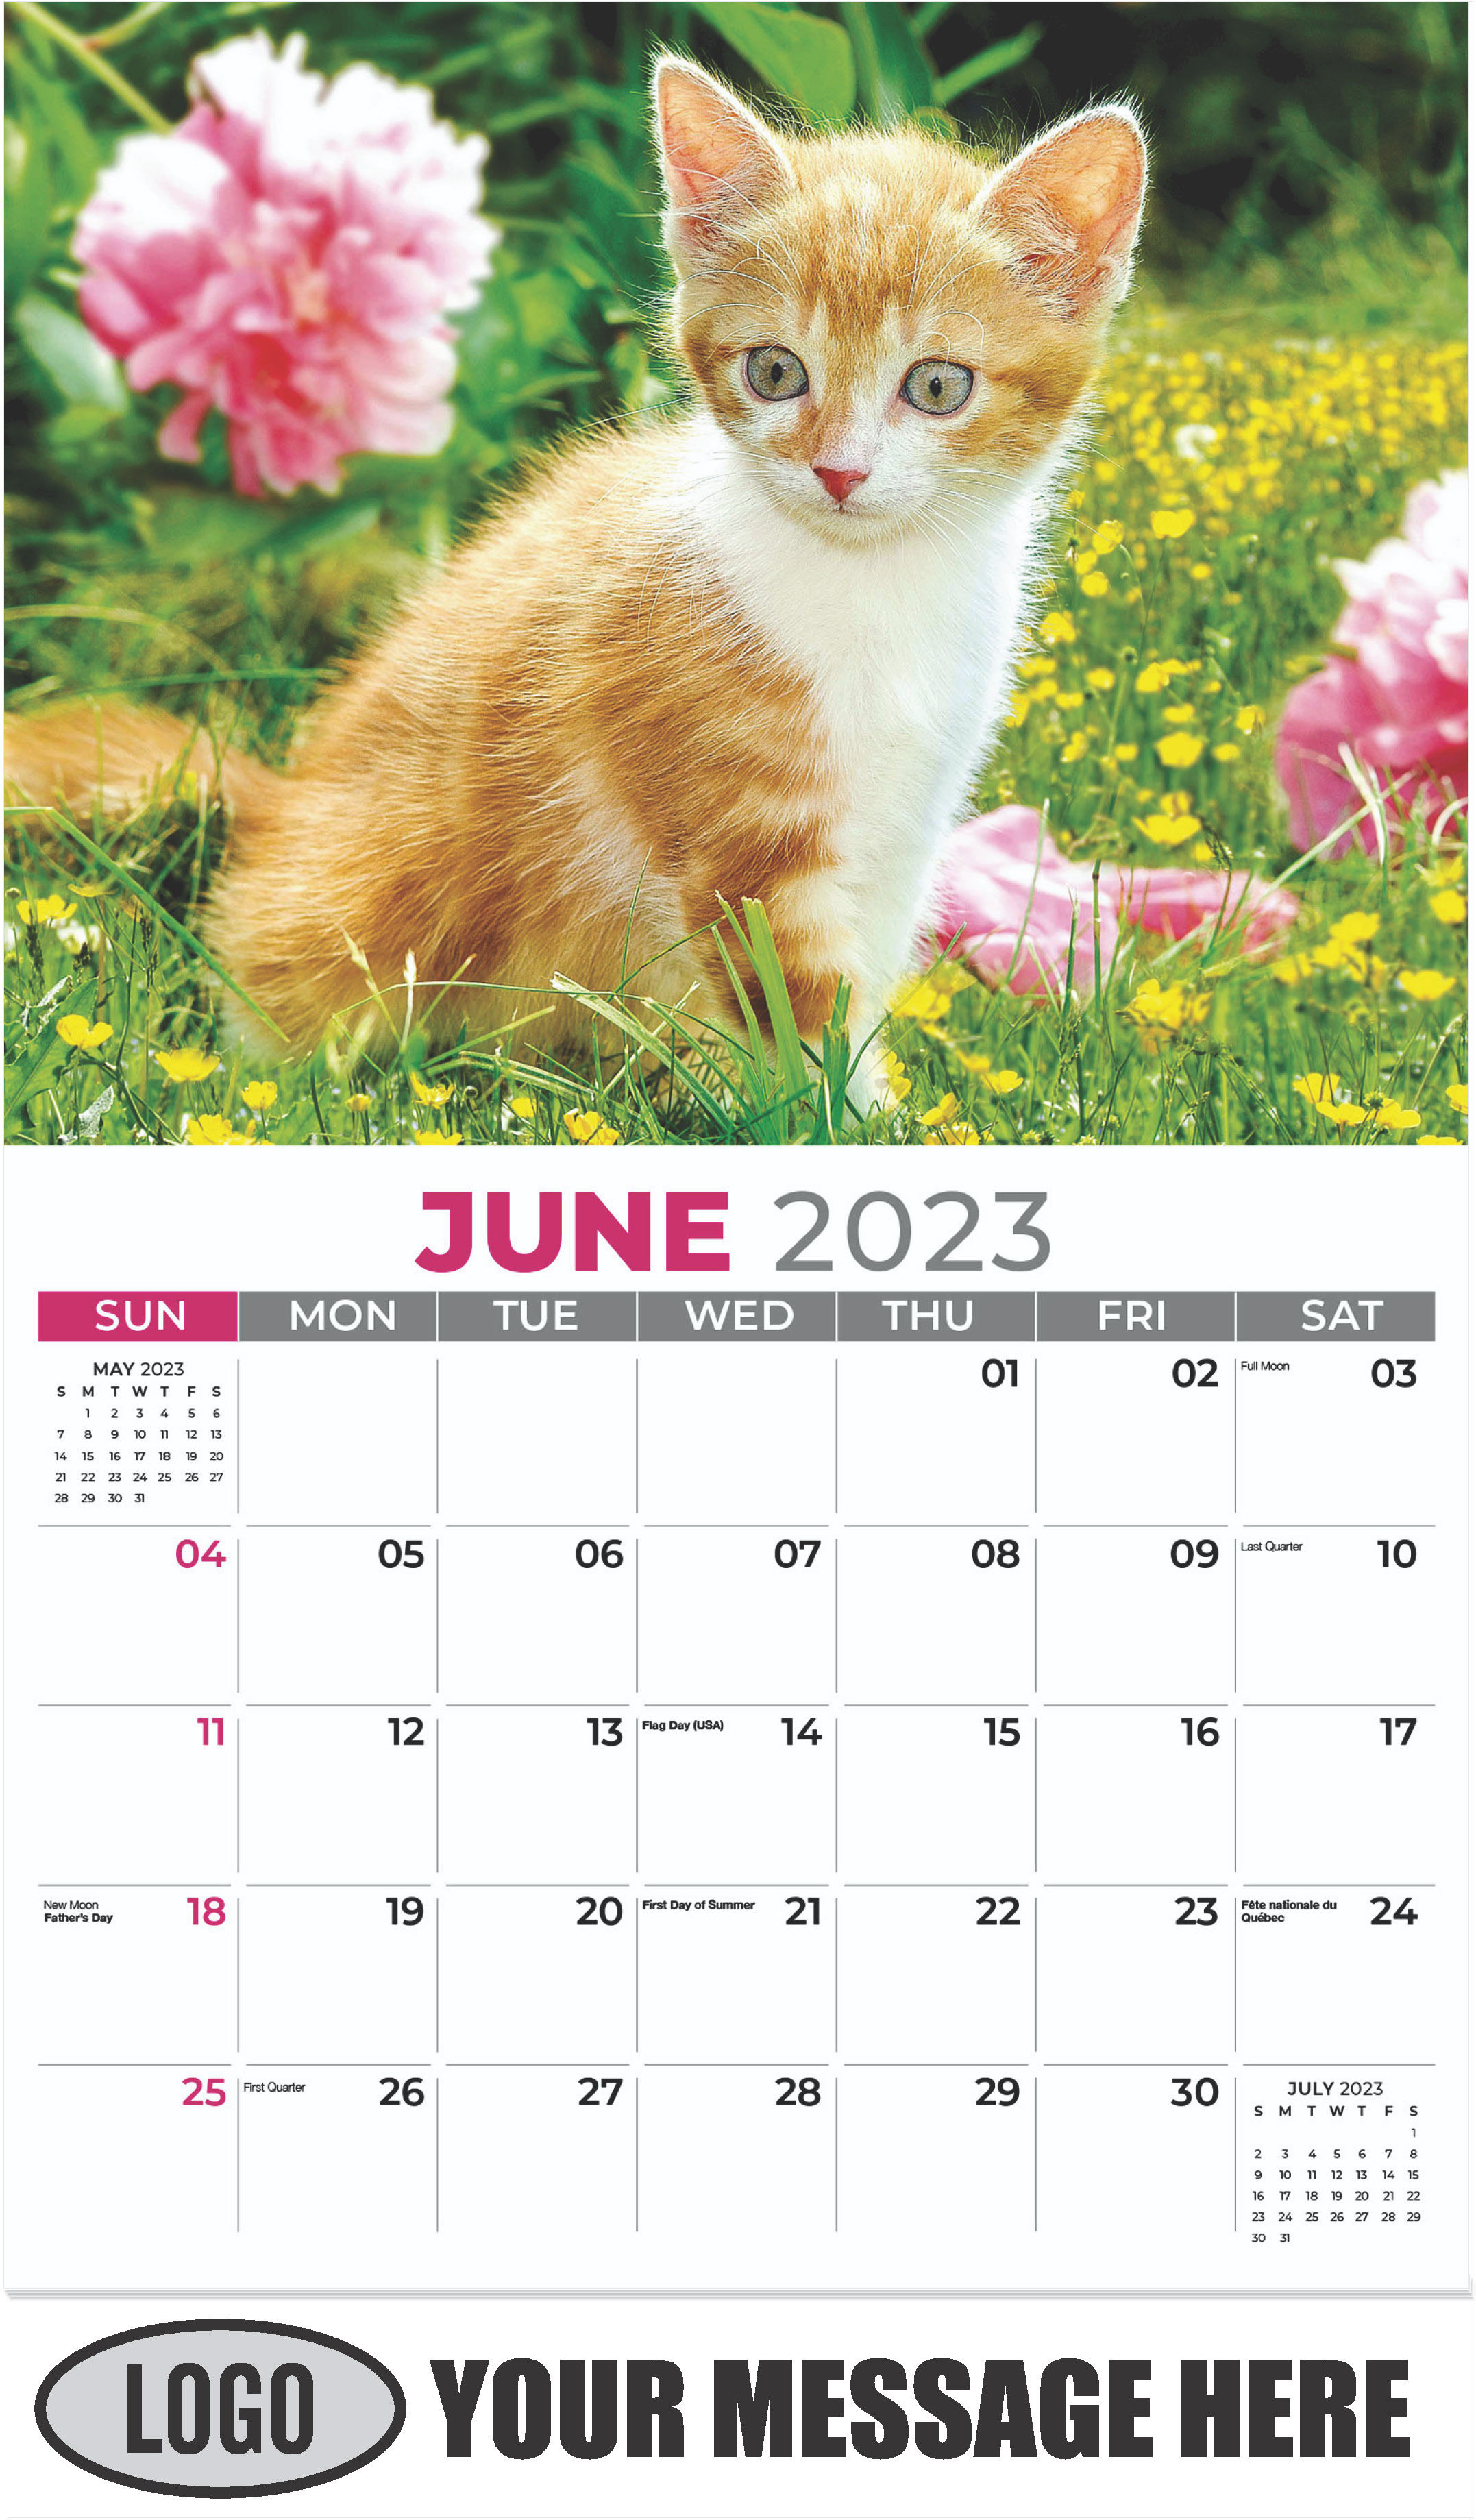 Domestic Cat - June - Kittens 2023 Promotional Calendar